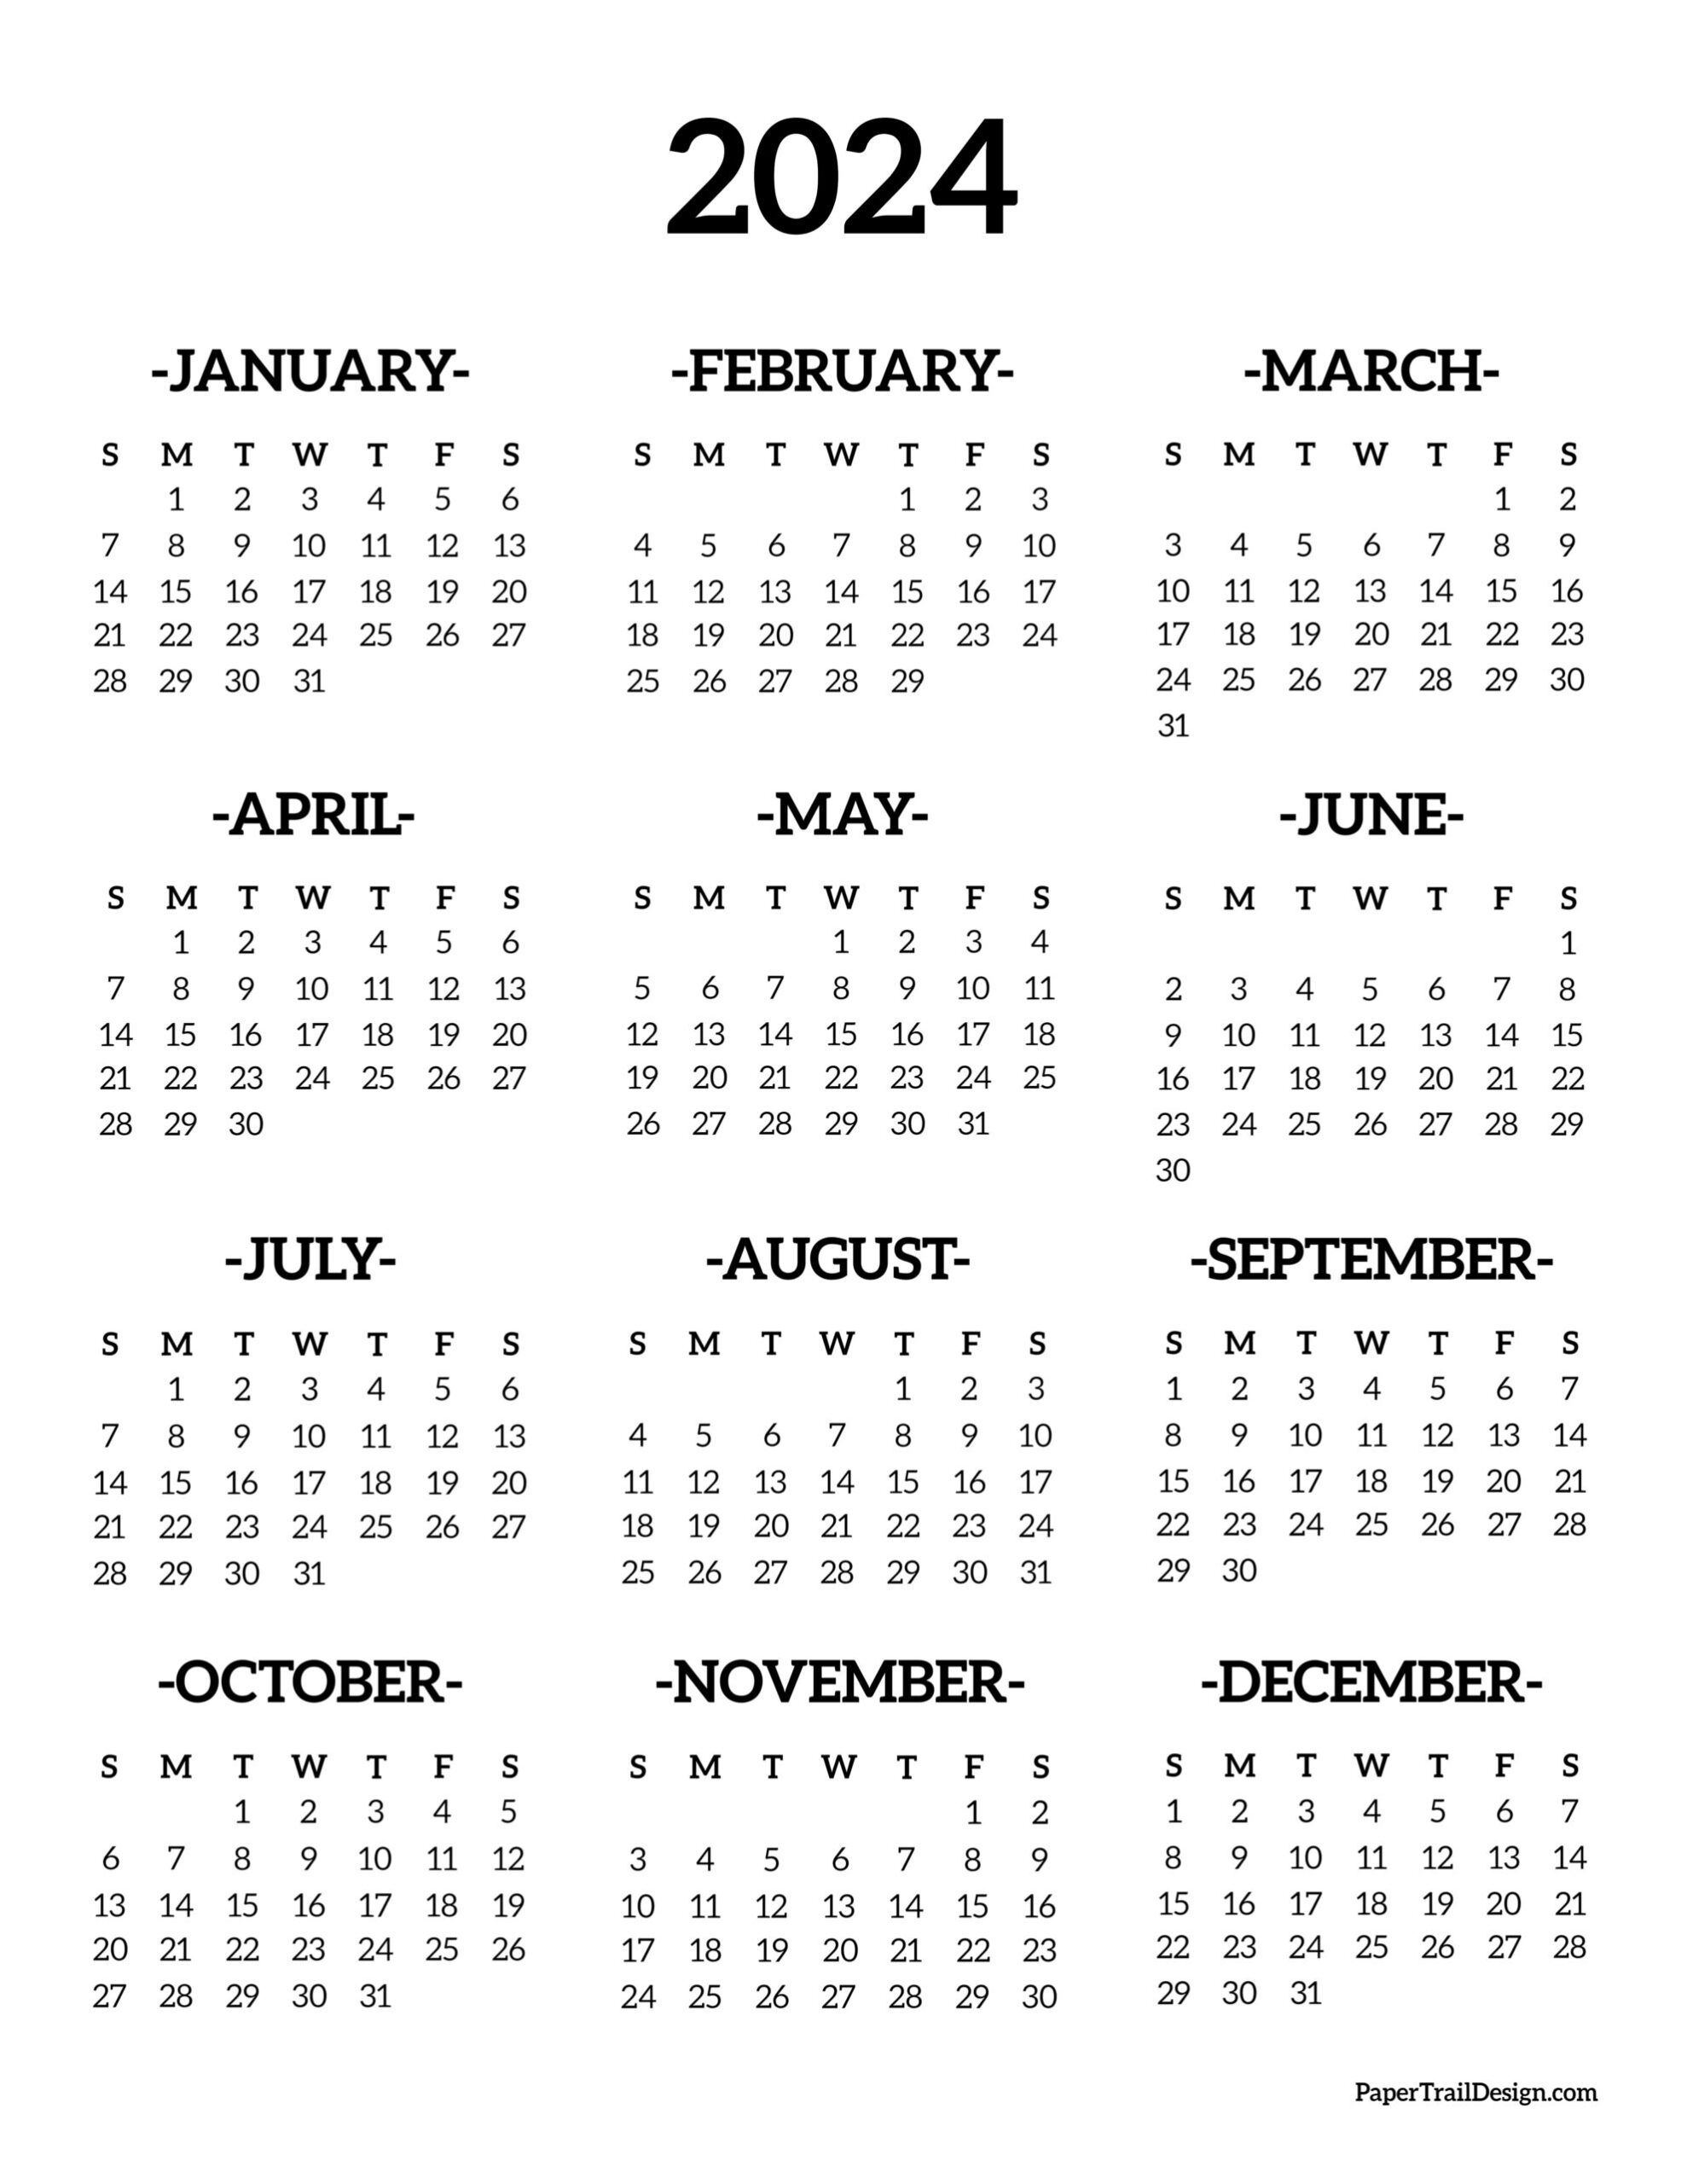 Calendar 2024 Printable One Page - Paper Trail Design | 2024 Calendar Free Printable